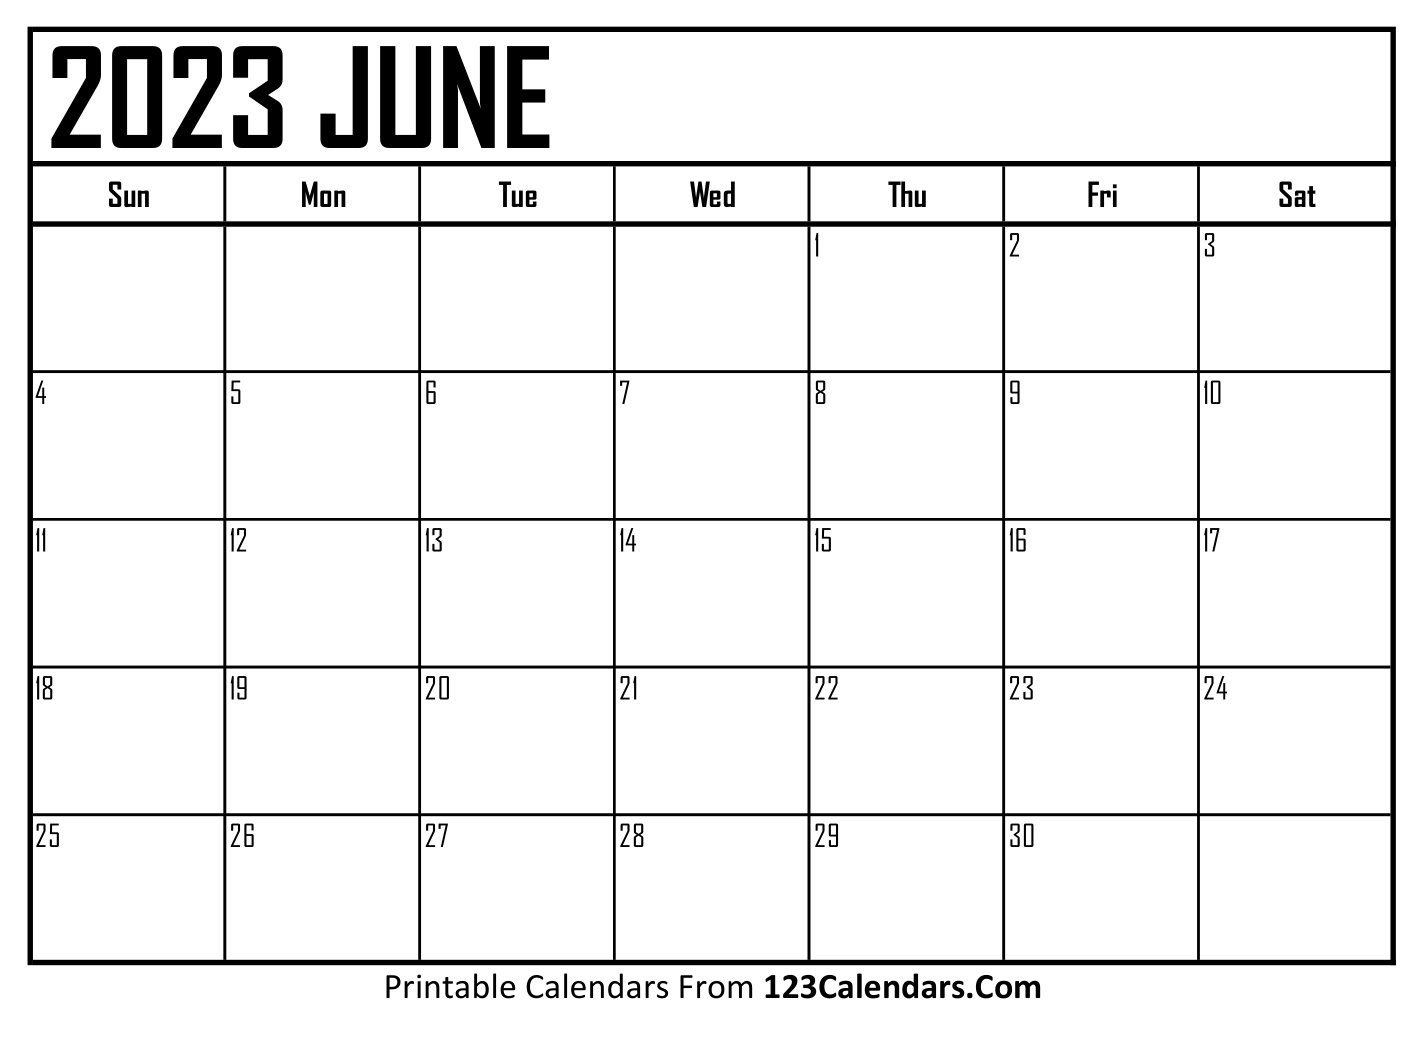 june-2023-calendar-monthly-printable-calendars